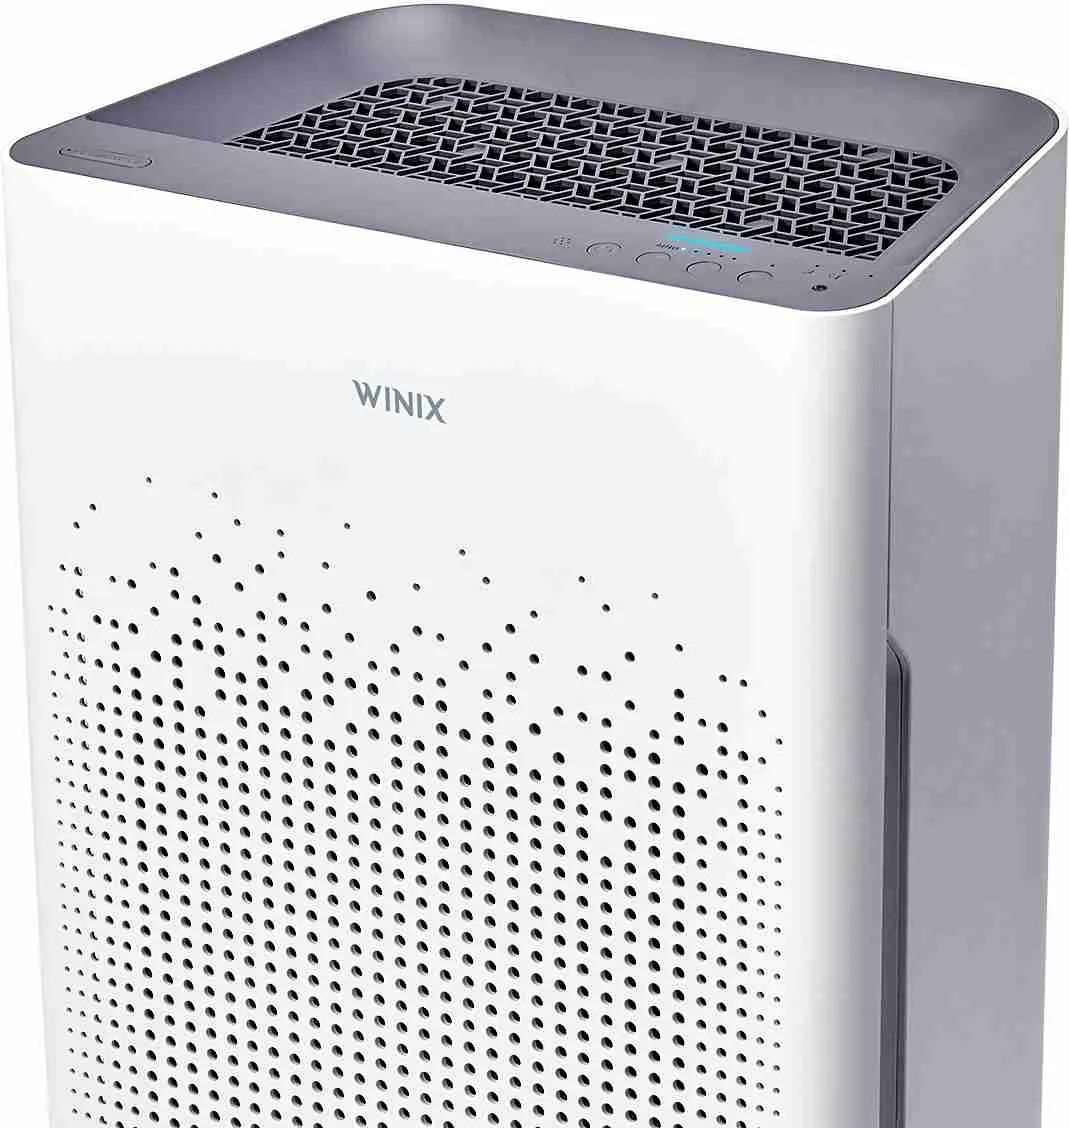 Winix Zero S inteligentná čistička vzduchu 1×1 ks, čistička vzduchu